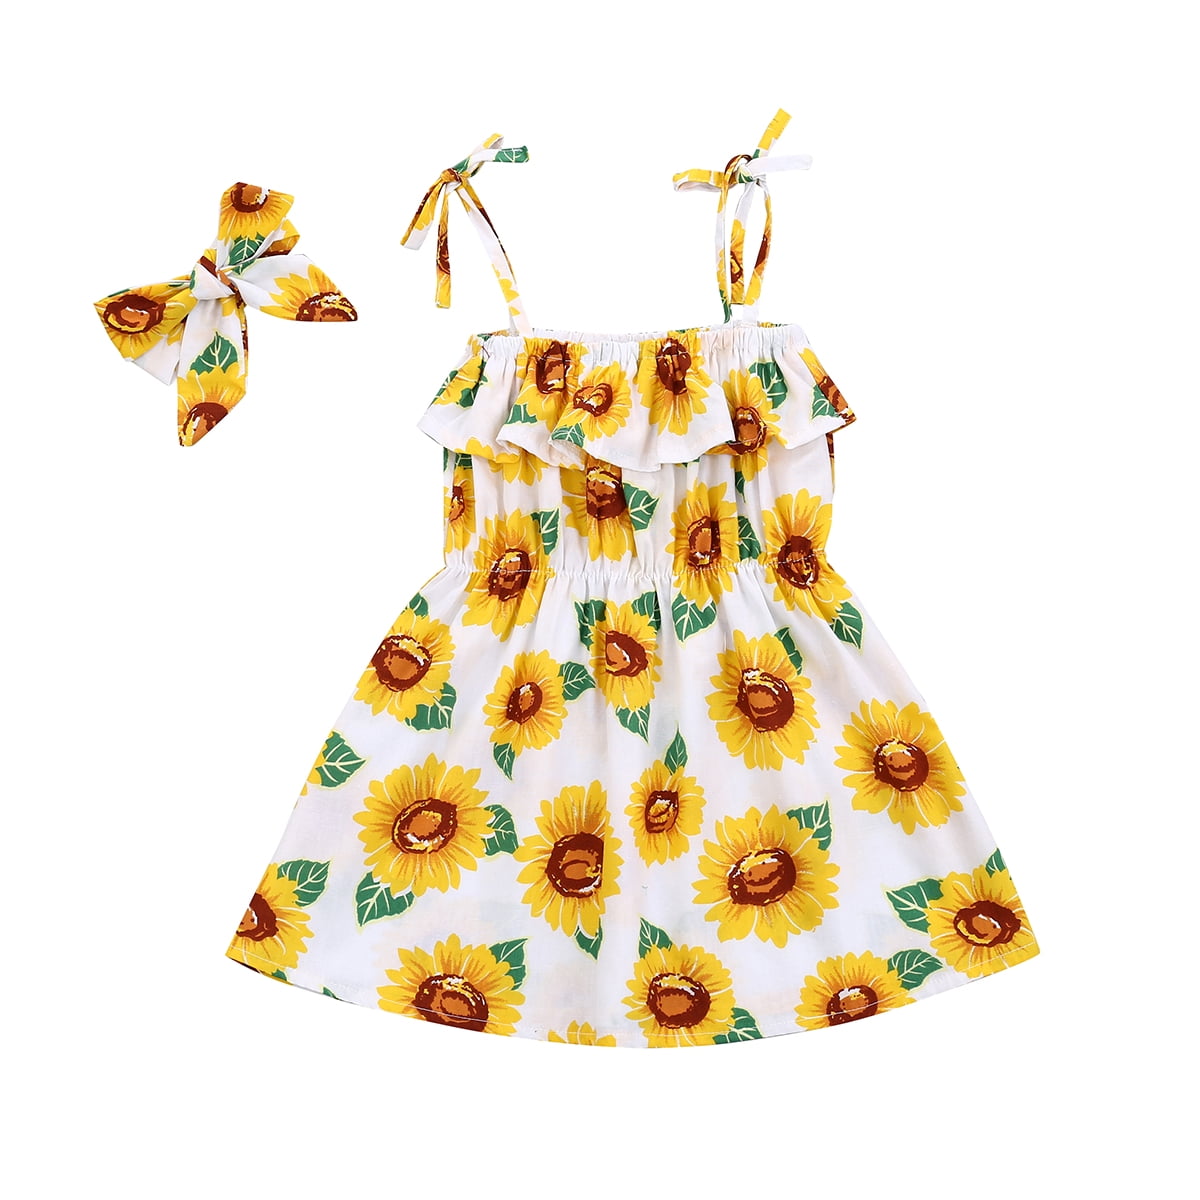 NEW Sunflower Suspender Skirt Girls Outfit Set 2T 3T 4T 5T 